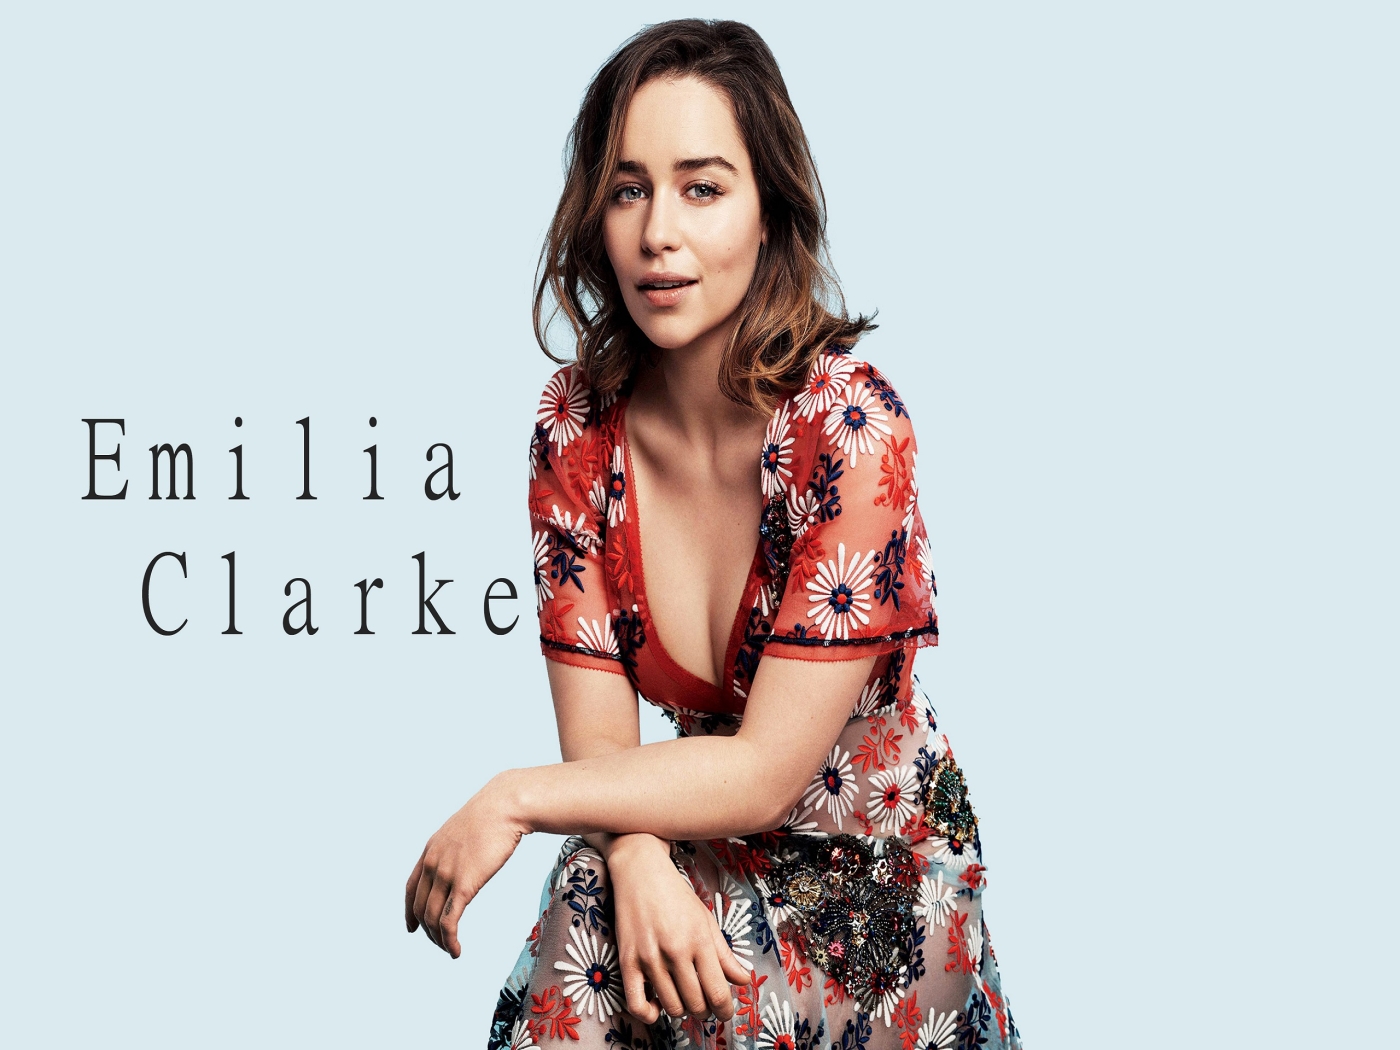 Emilia Clarke 2017 for 1400 x 1050 resolution